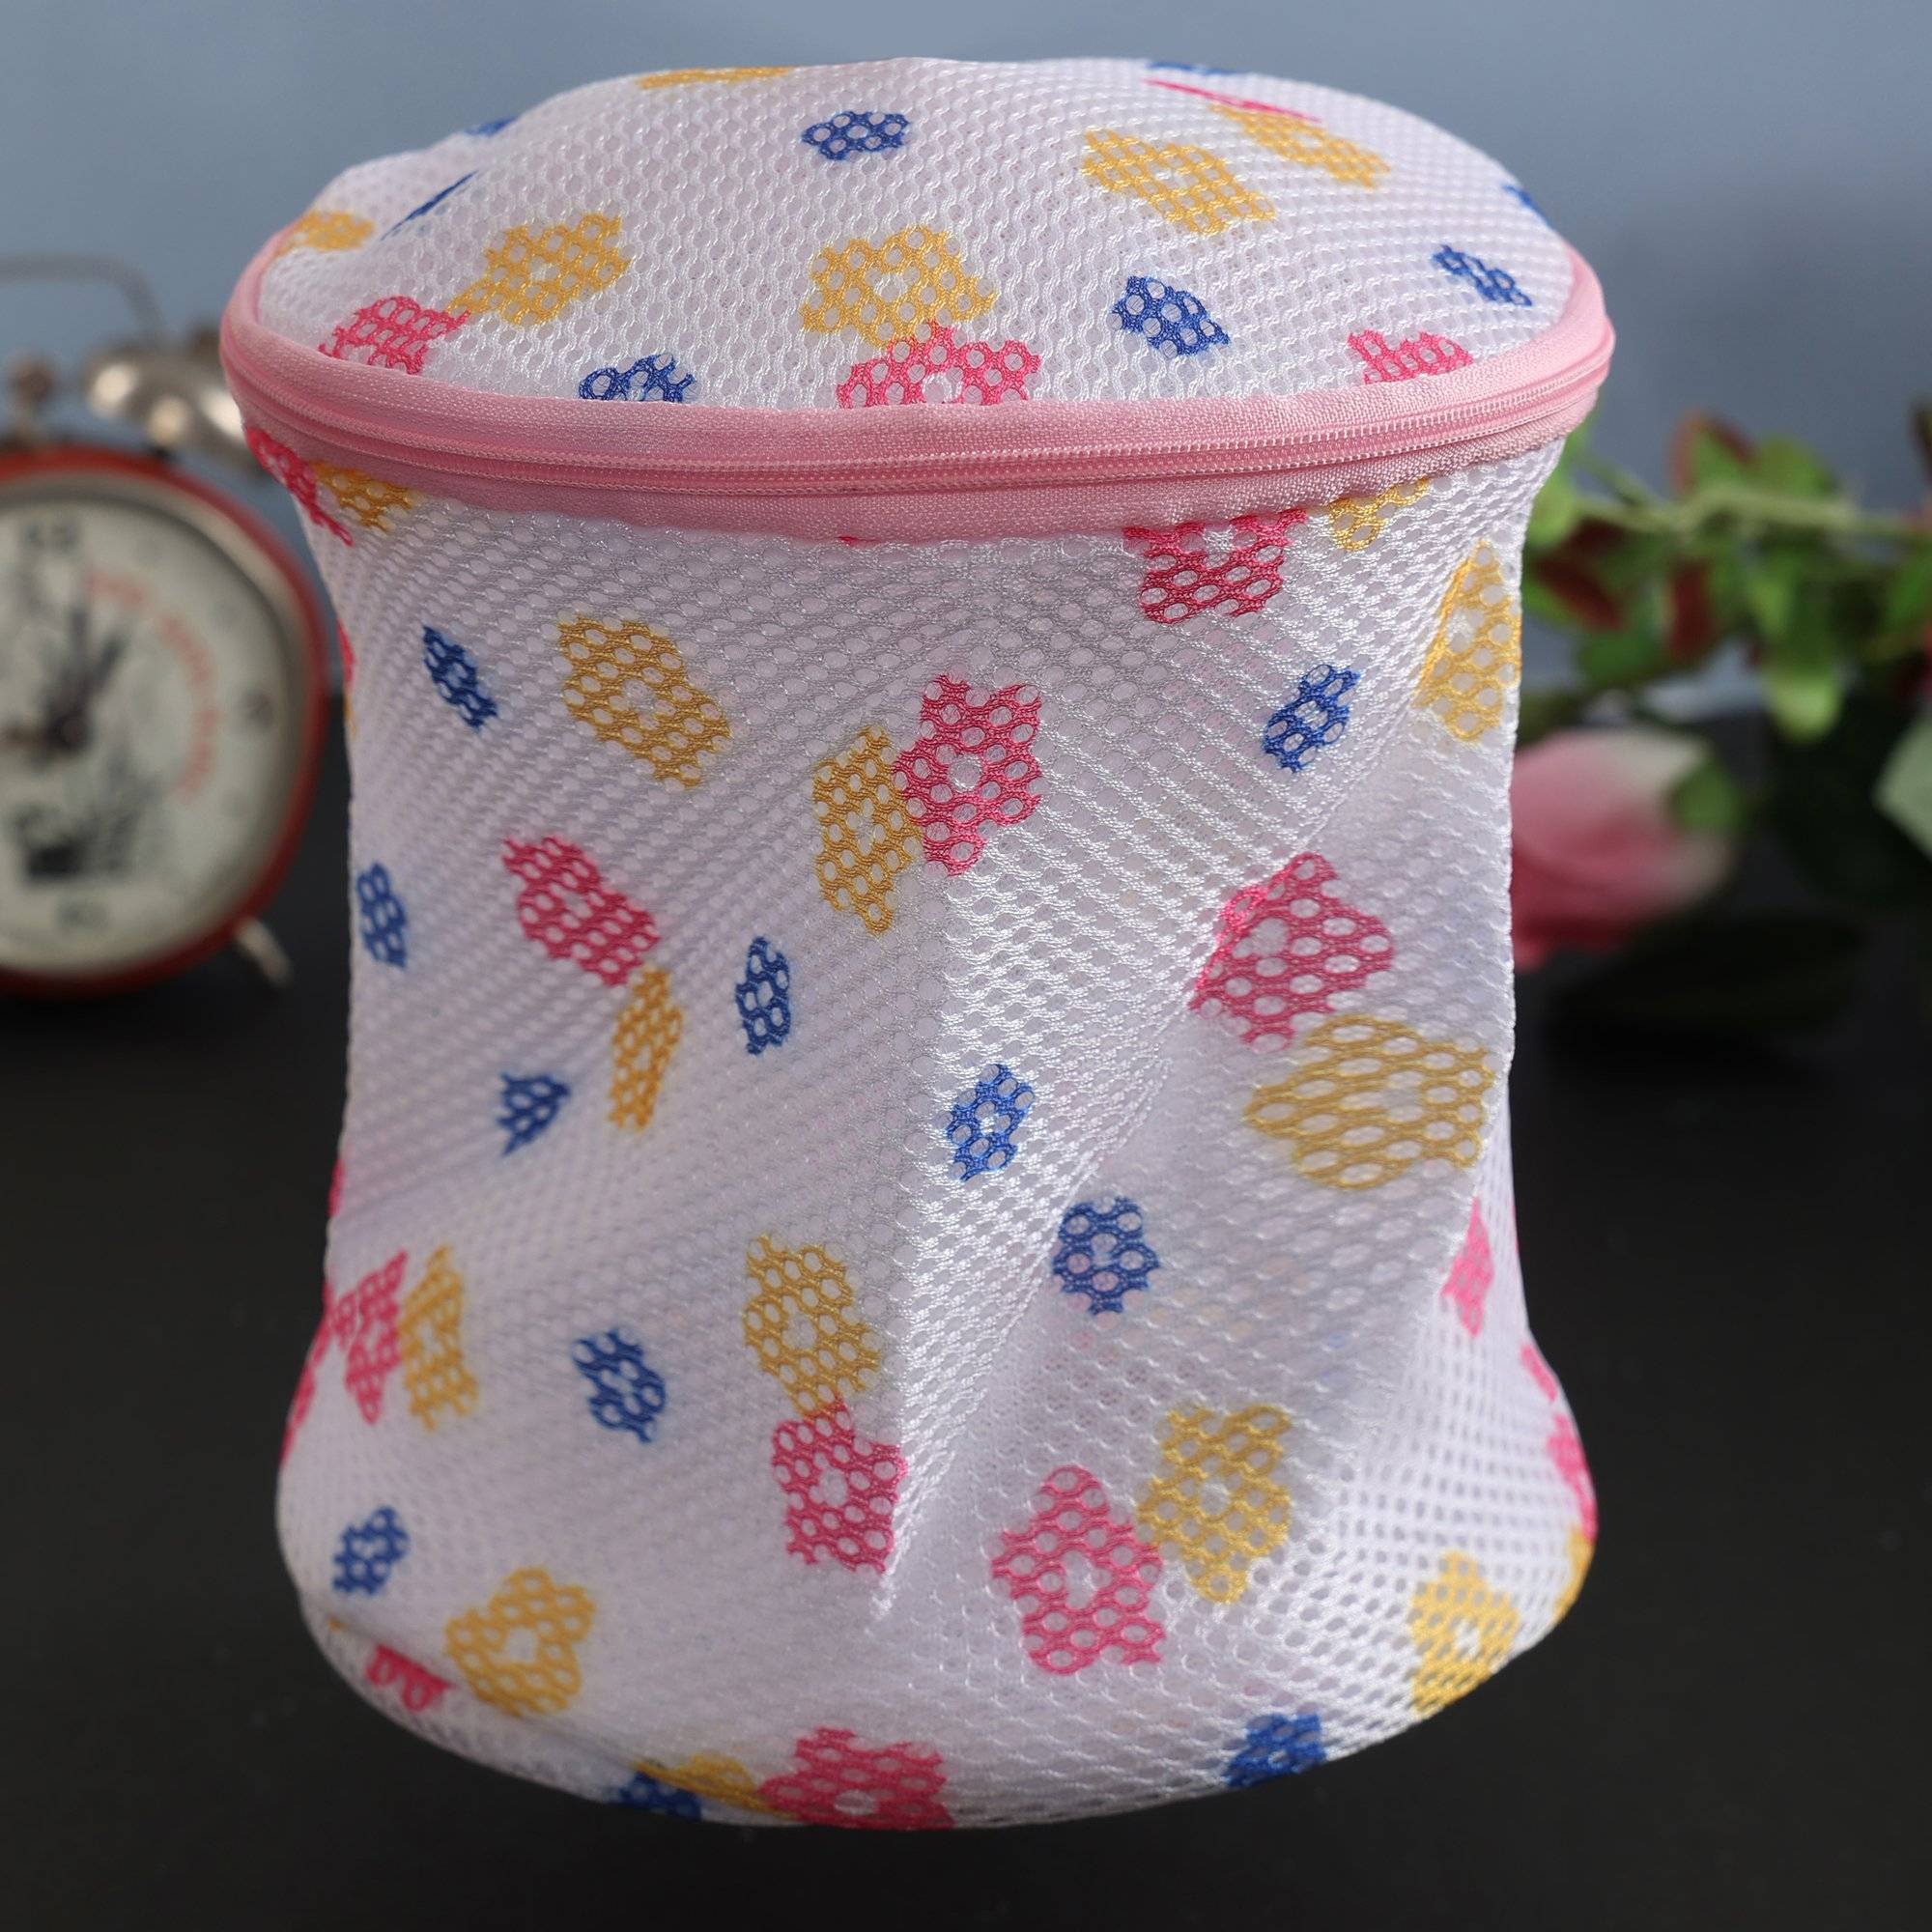 Buy Lovebird Lingerie Laundry Bag - Pink at Rs.350 online